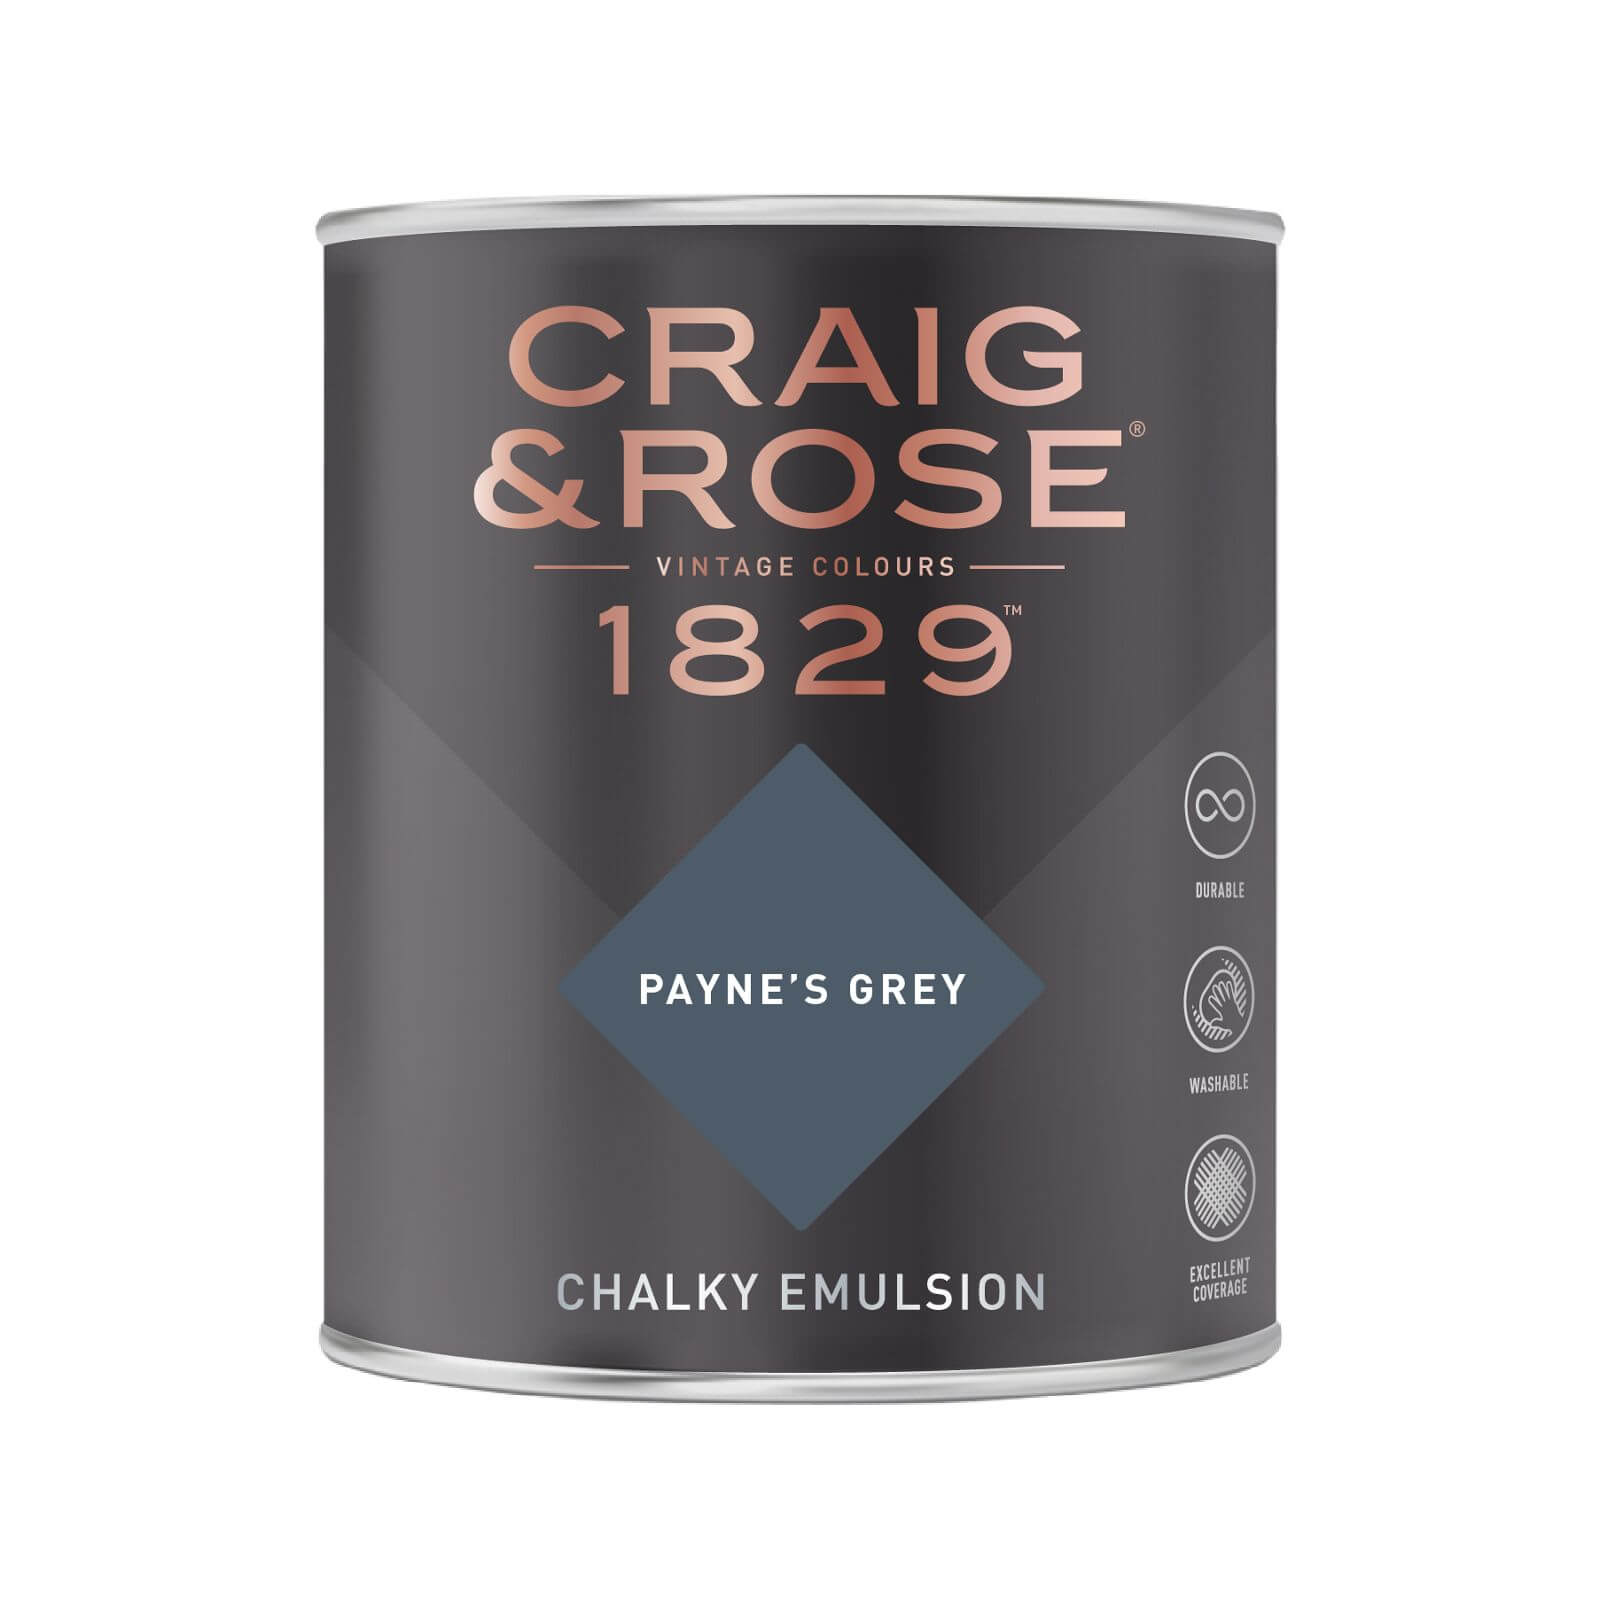 Craig & Rose 1829 Chalky Emulsion Paint Paynes Grey - 750ml